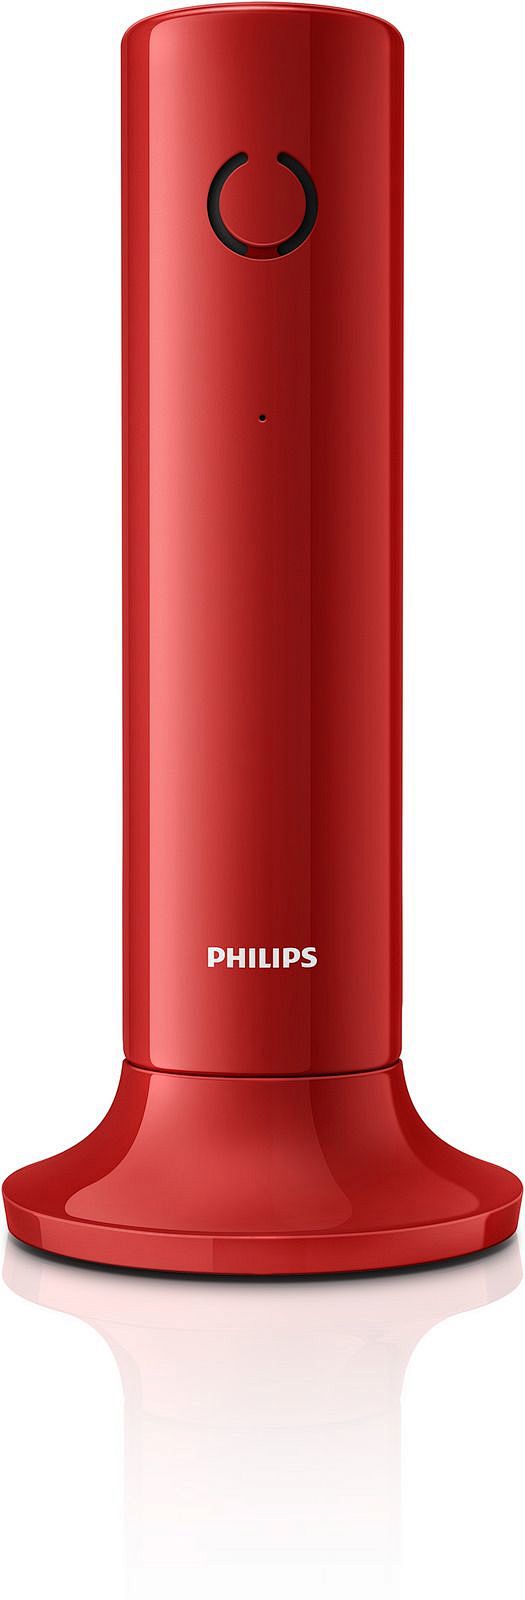 Philips Linea design...